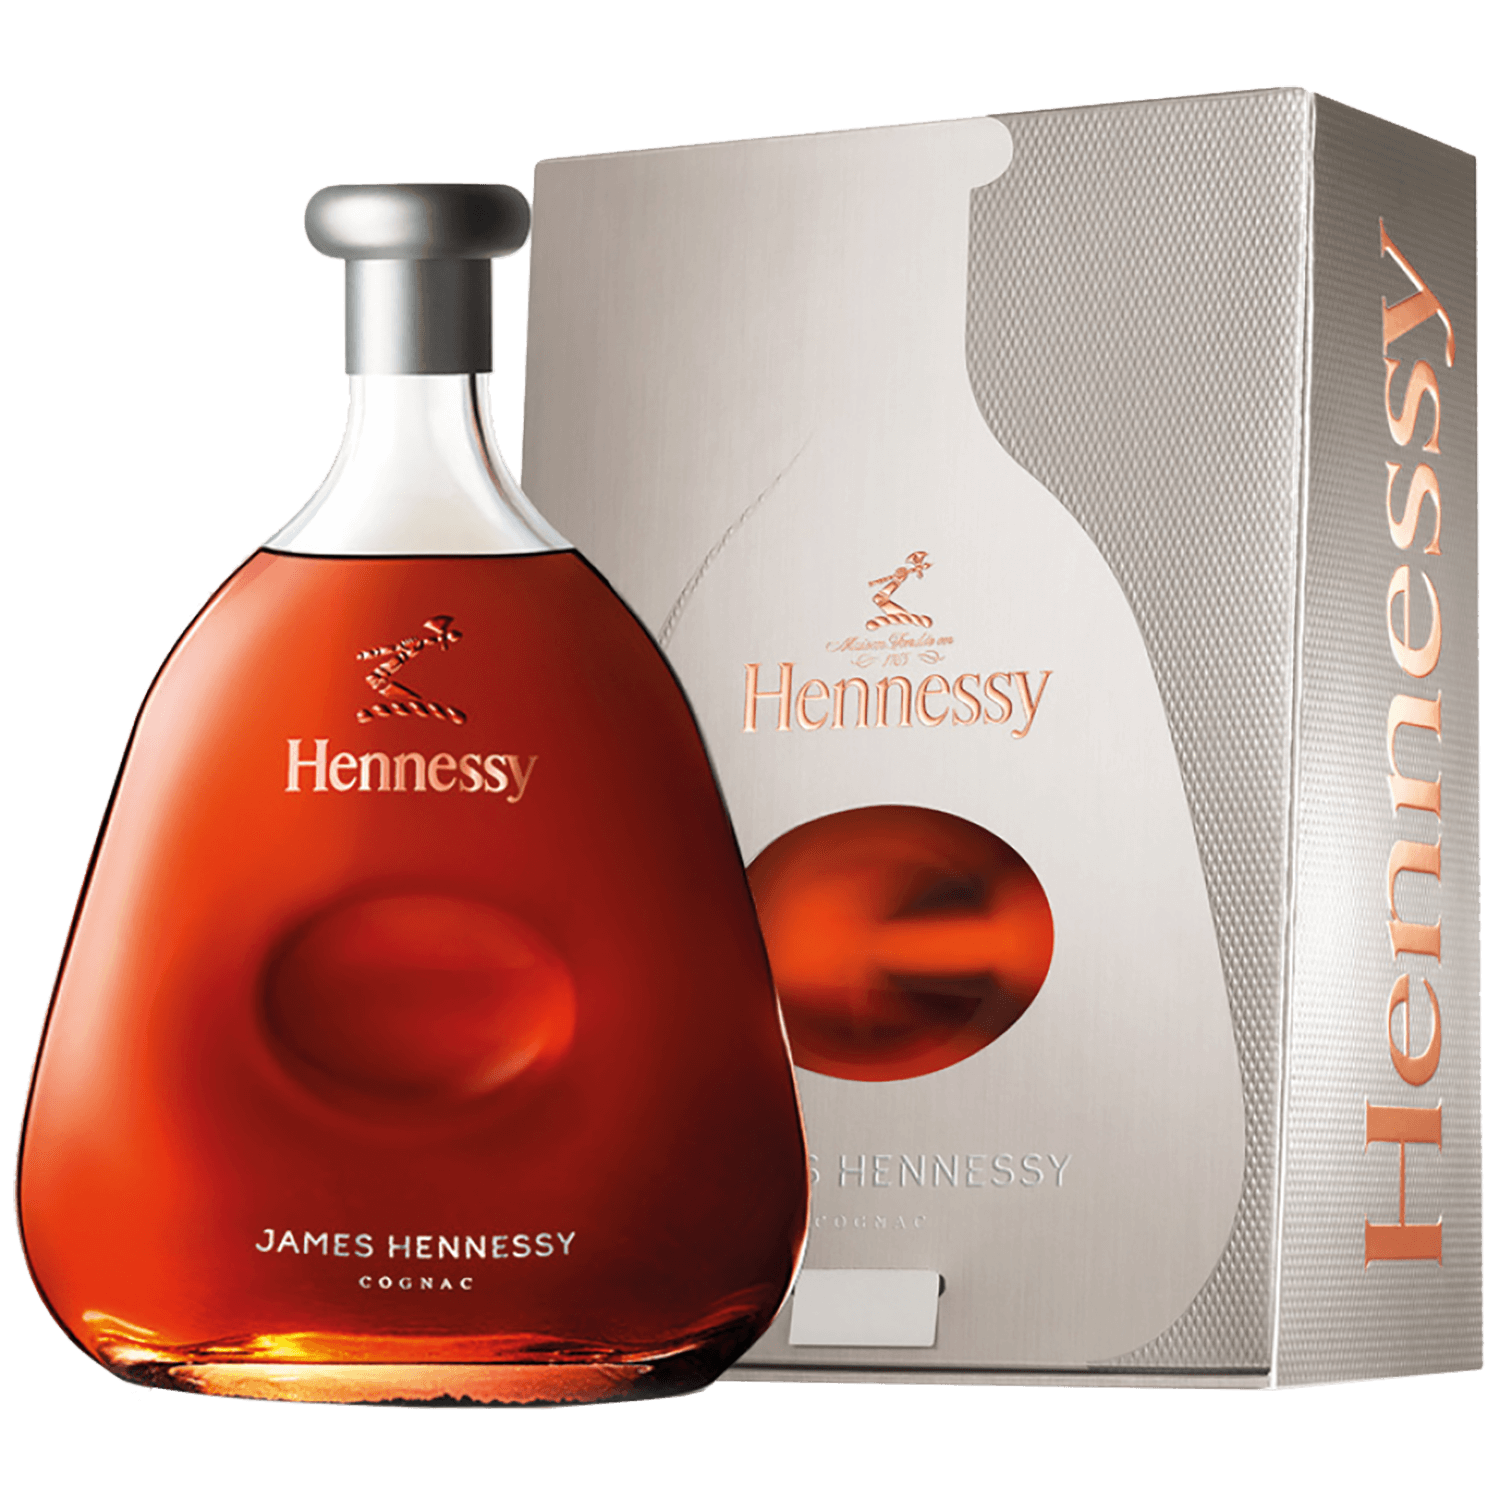 Hennessy James Hennessy Cognac (gift box) hennessy cognac xo gift box